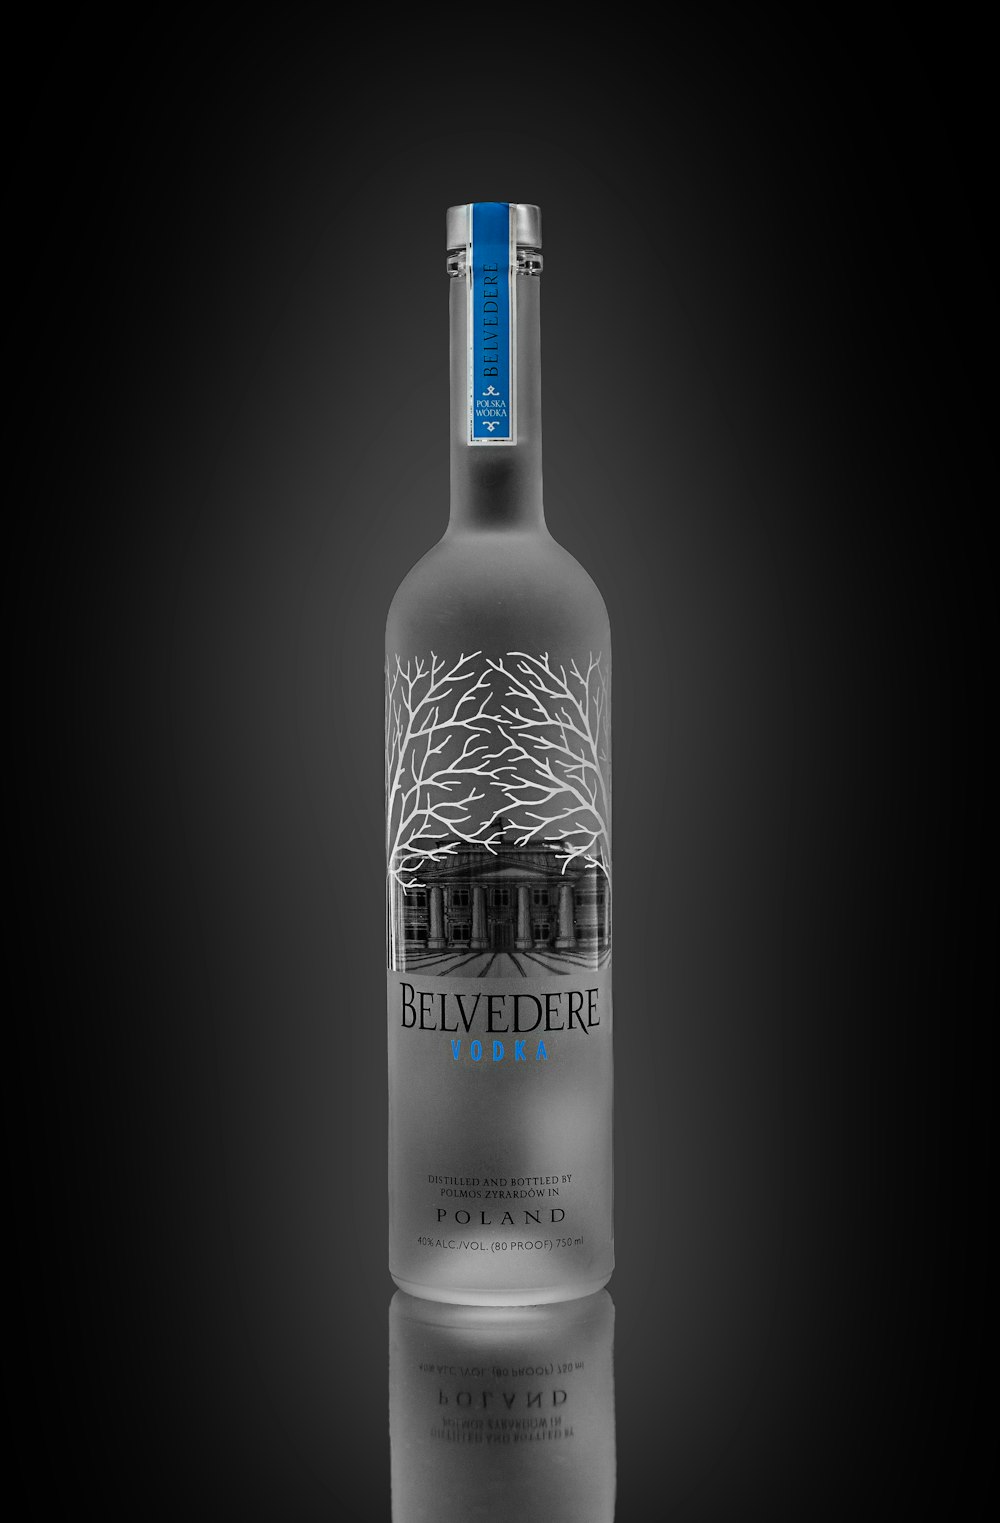 A bottle of belvedere vodka on a black background photo – Free Somewhere  Image on Unsplash